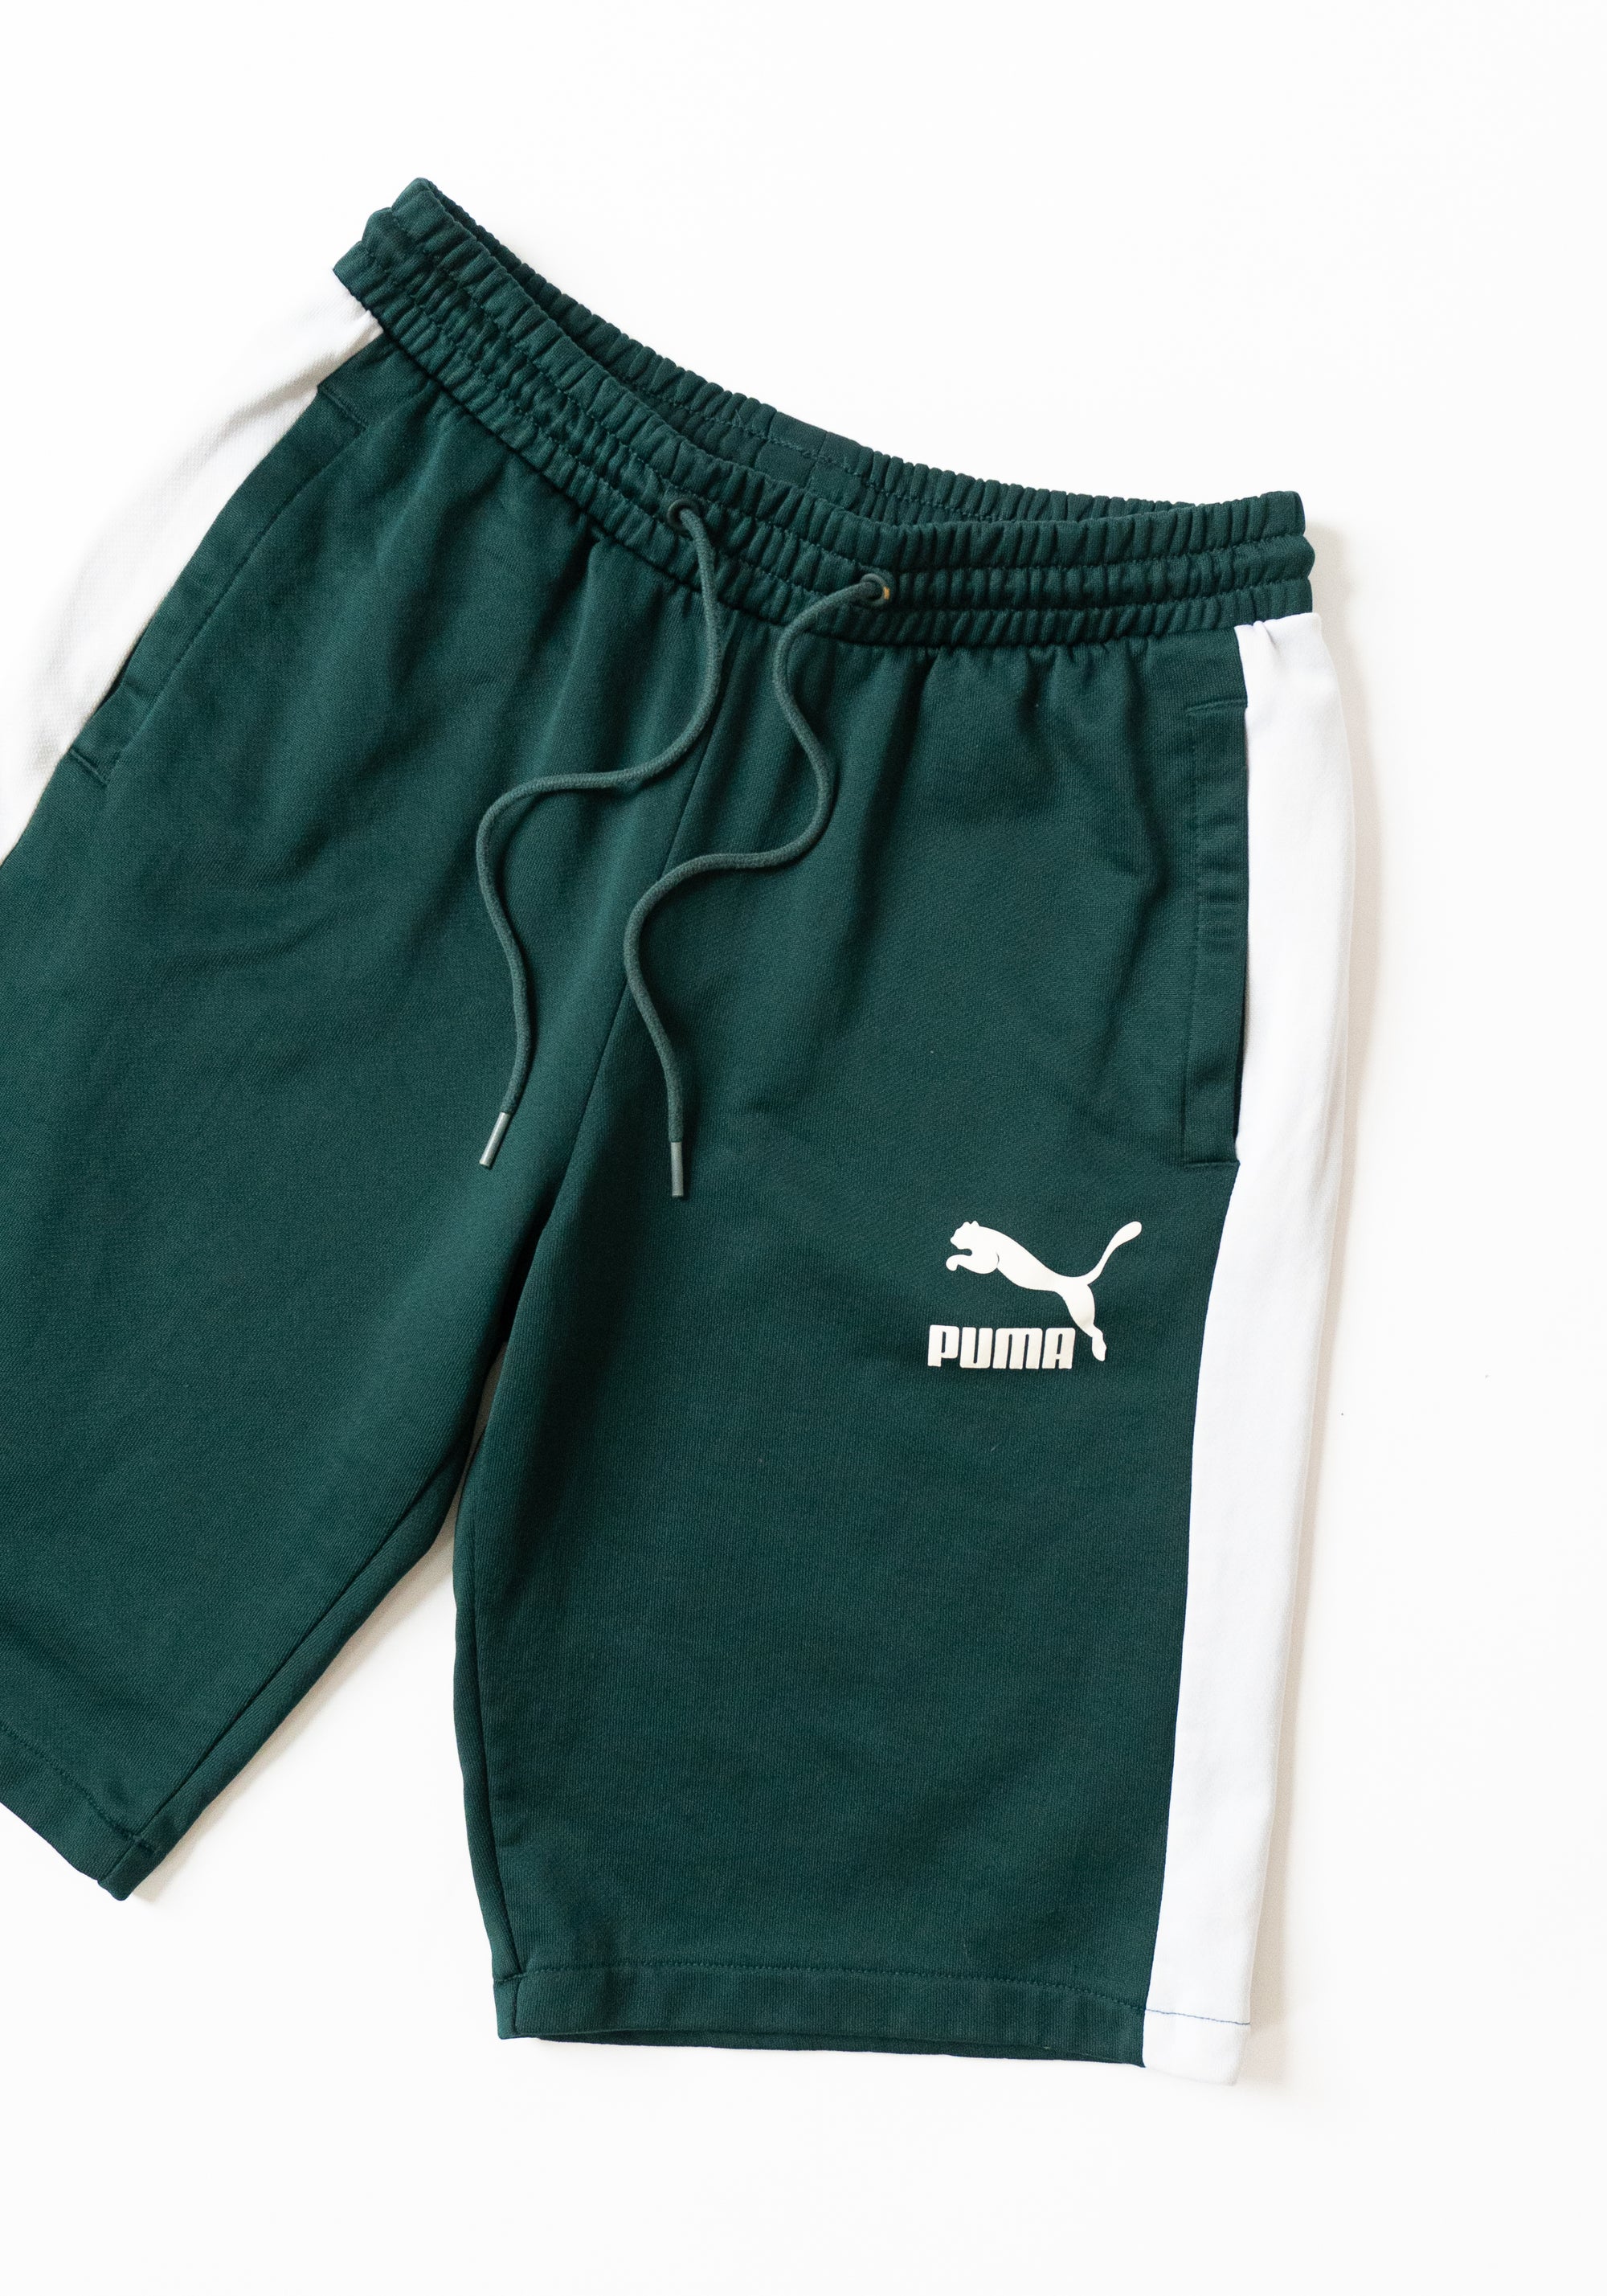 Vintage Puma Shorts